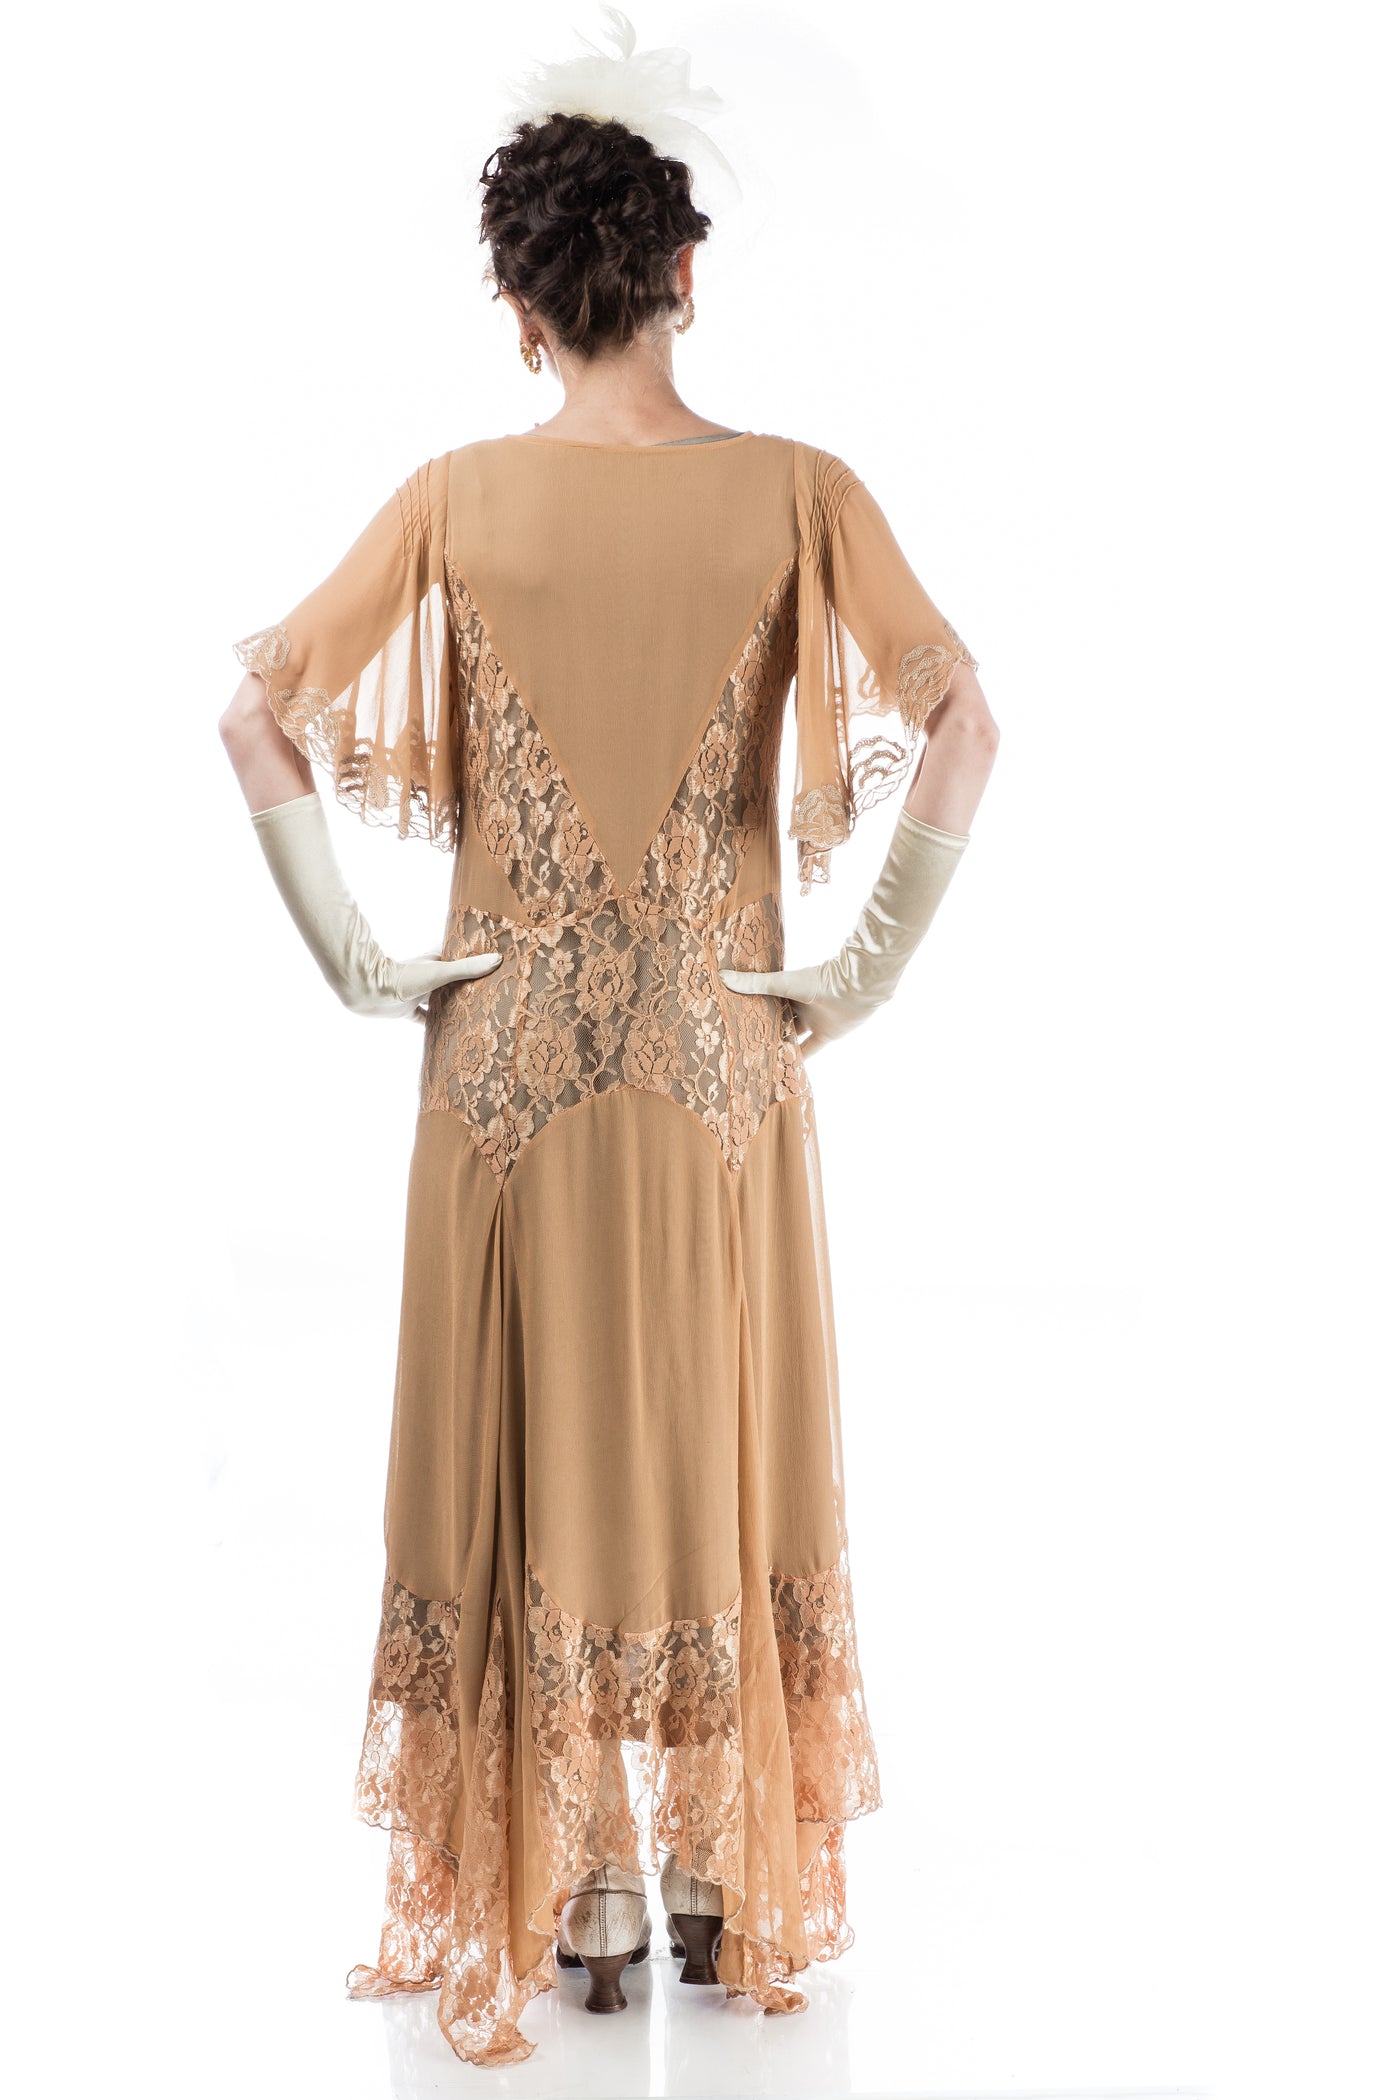     Irene-Art-Nouveau-Style-Dress-in-Gold-Silver-by-Nataya-back